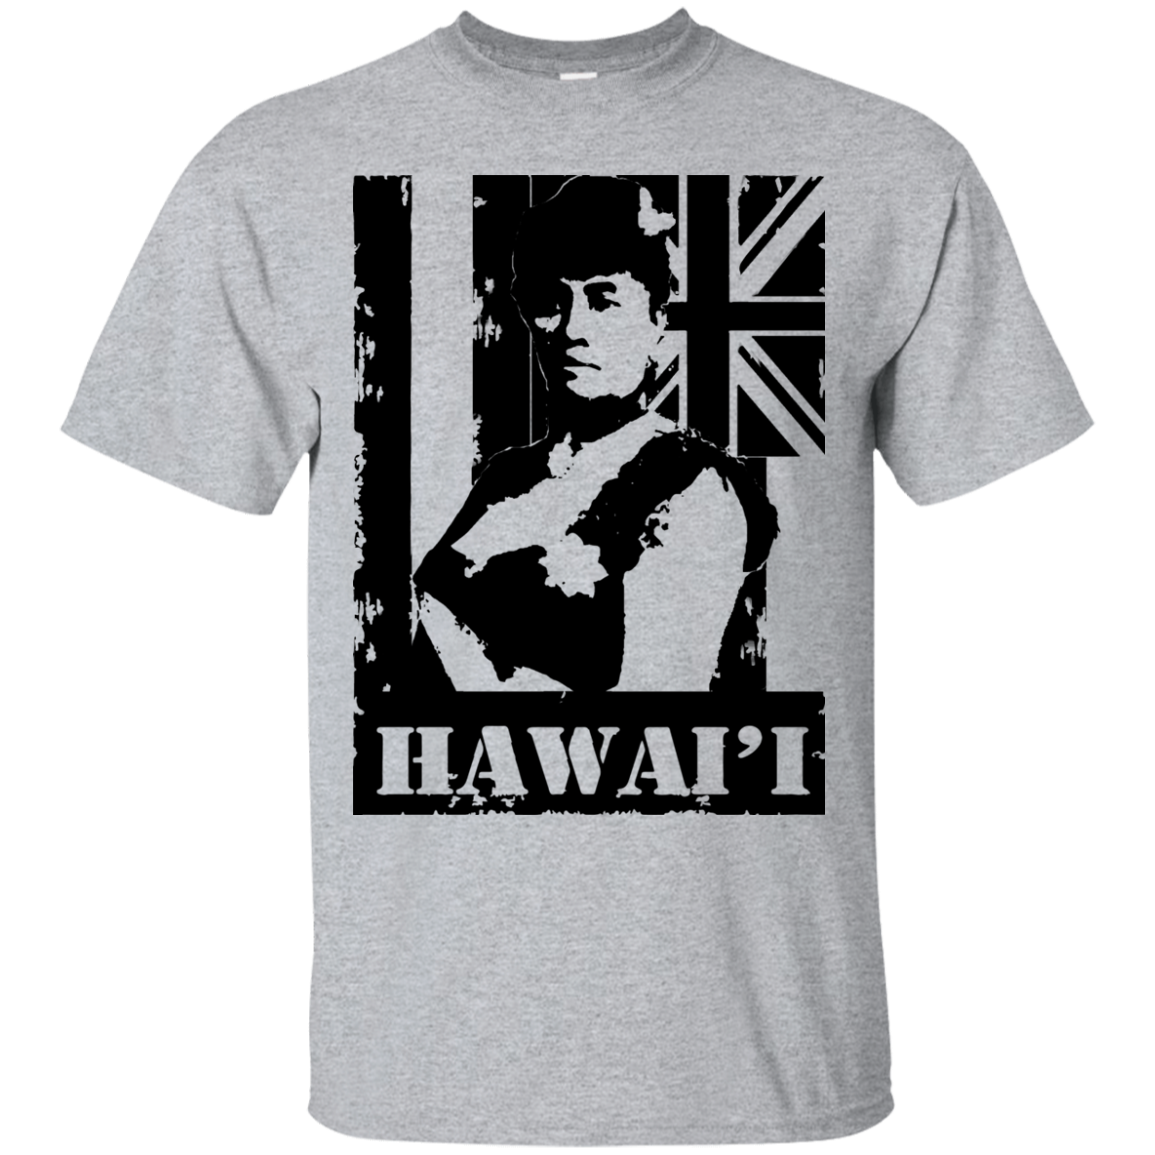 Hawai'i Queen Liliuokalani Ultra Cotton T-Shirt, T-Shirts, Hawaii Nei All Day